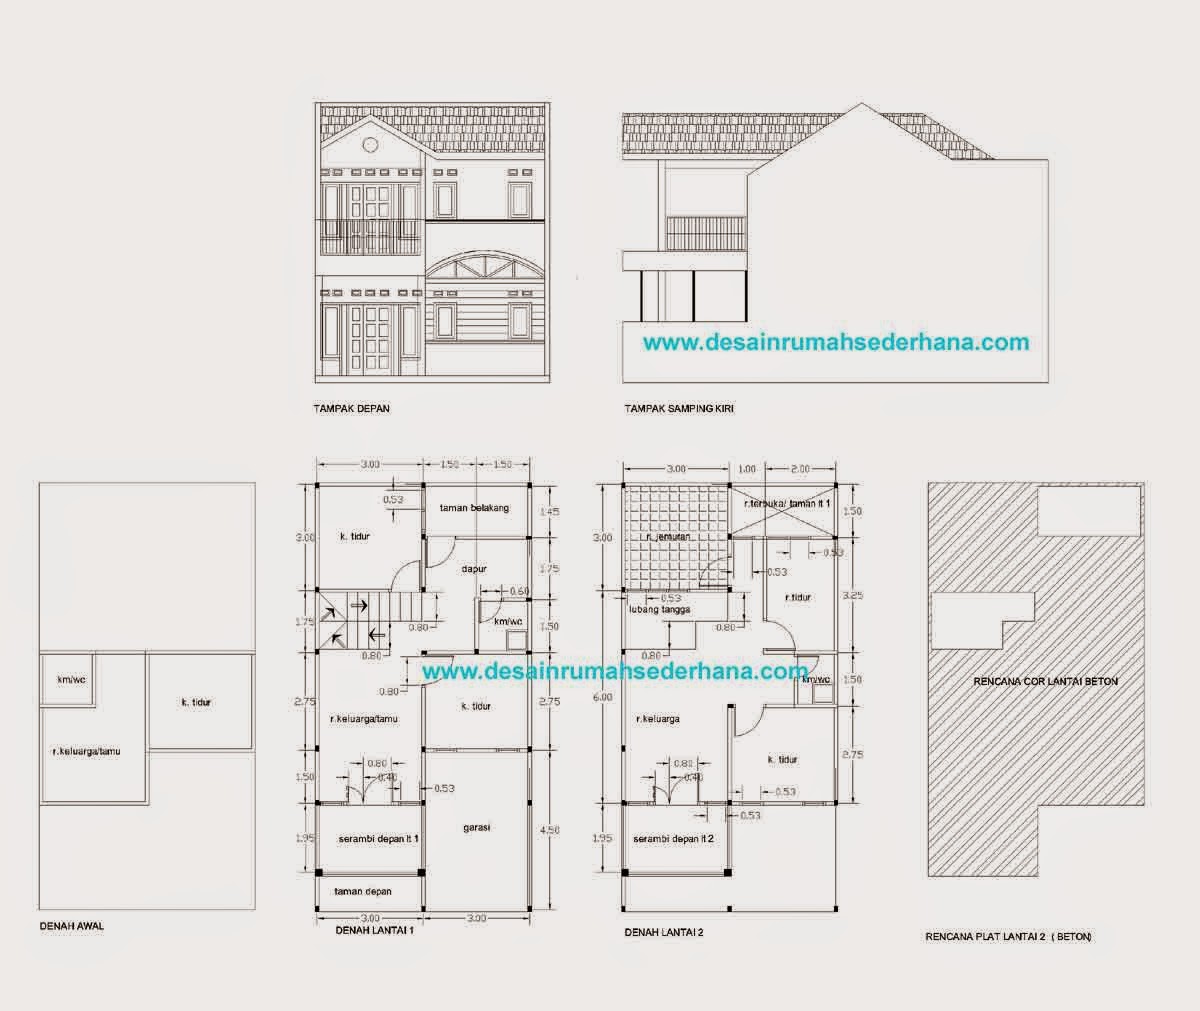 67 Desain  Rumah  Minimalis 2  Lantai  Autocad  Desain  Rumah  